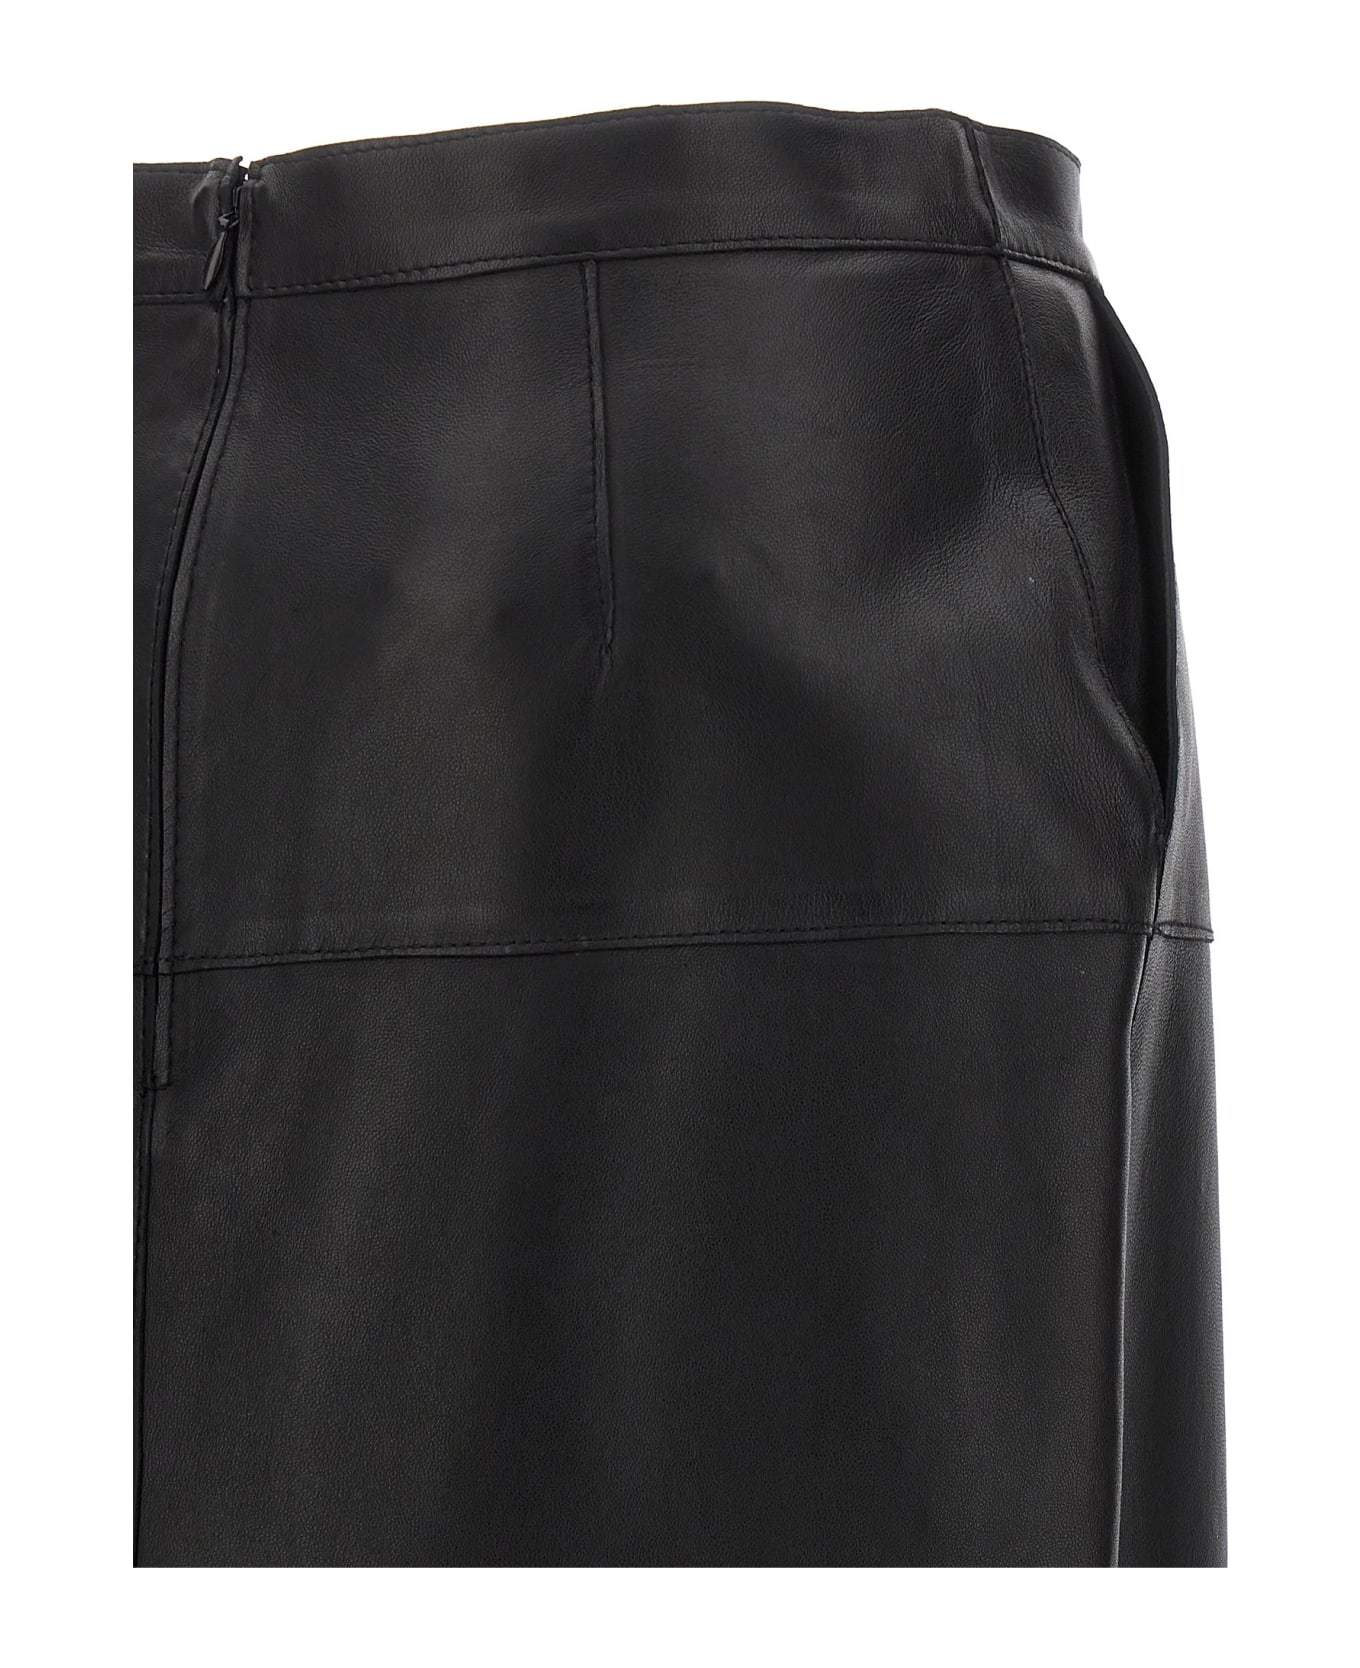 Parosh Leather Skirt - Black   スカート